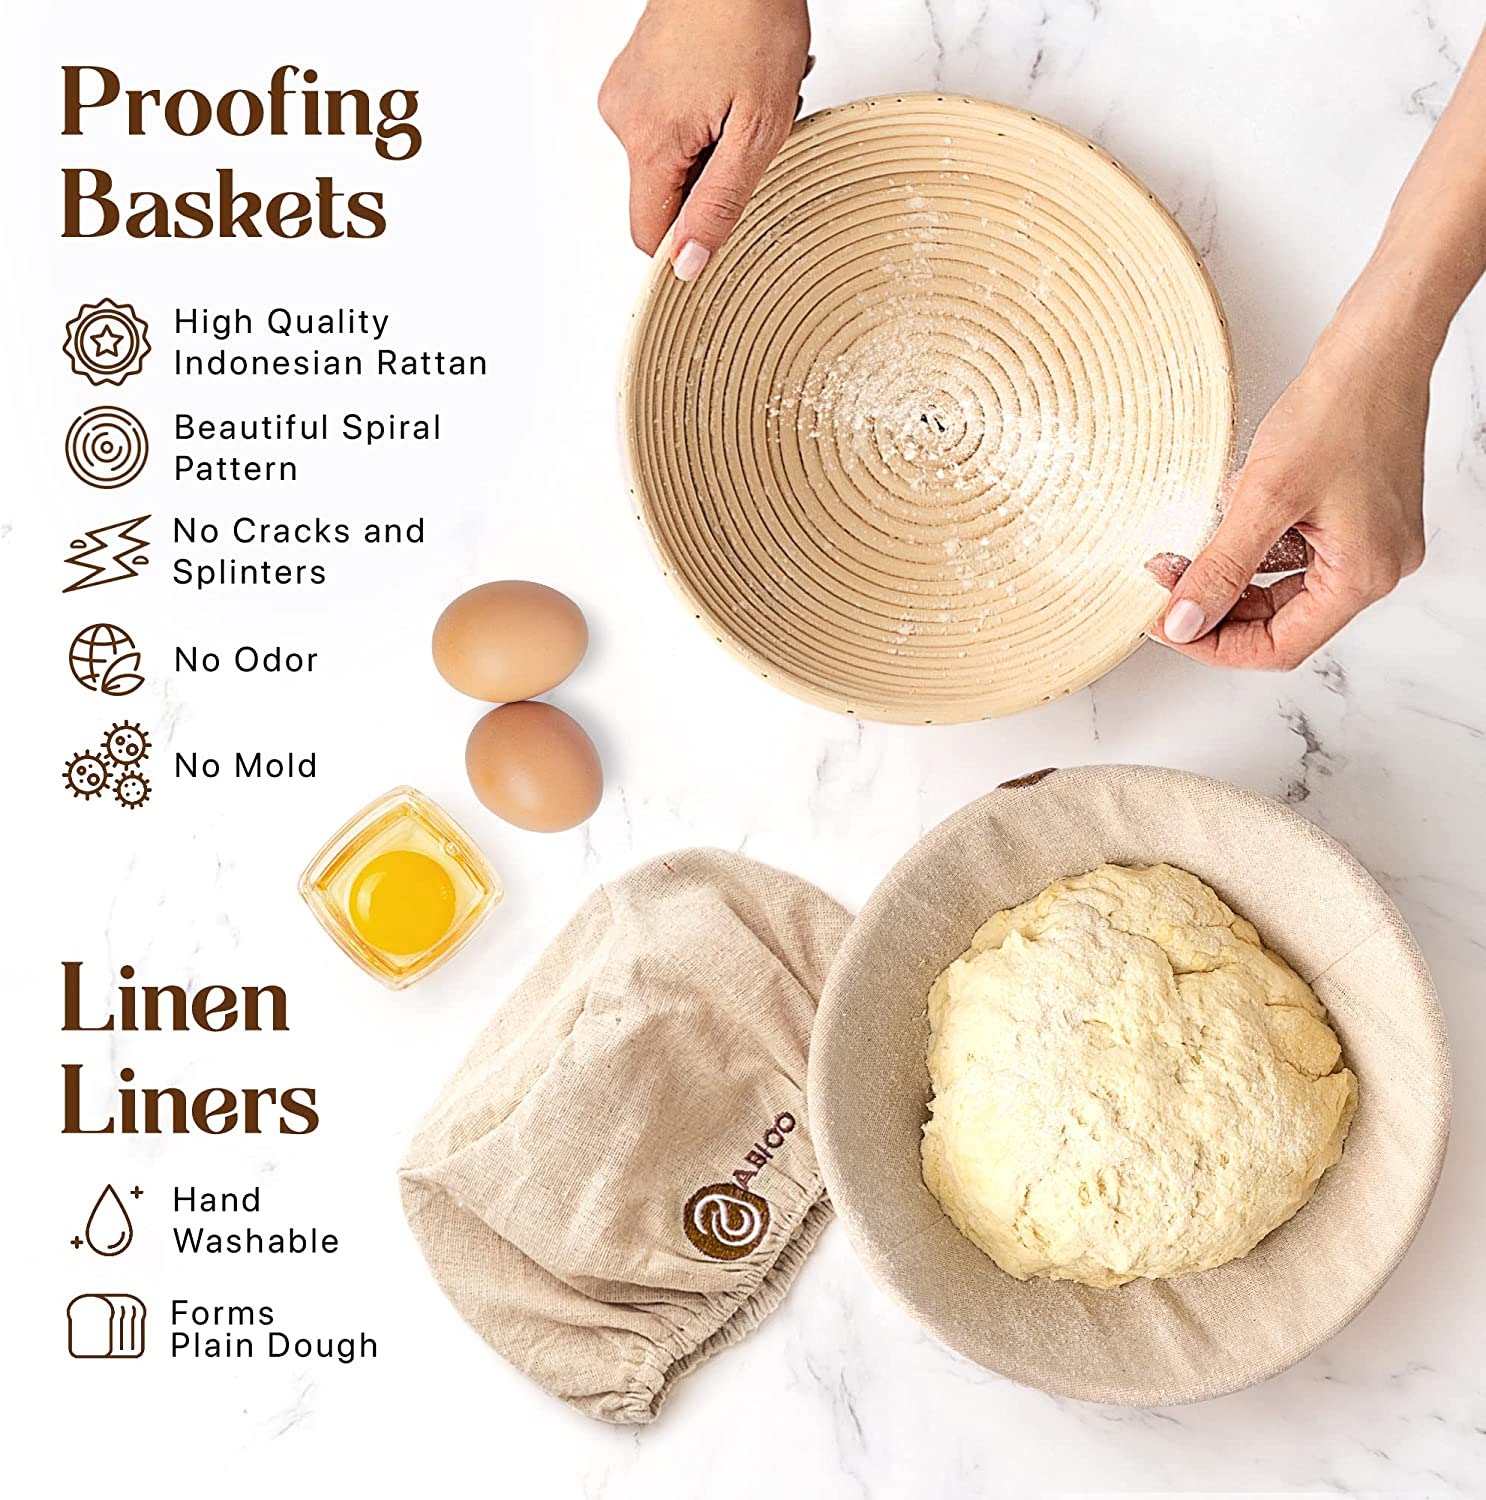 Set of 2 Bread Proofing Basket